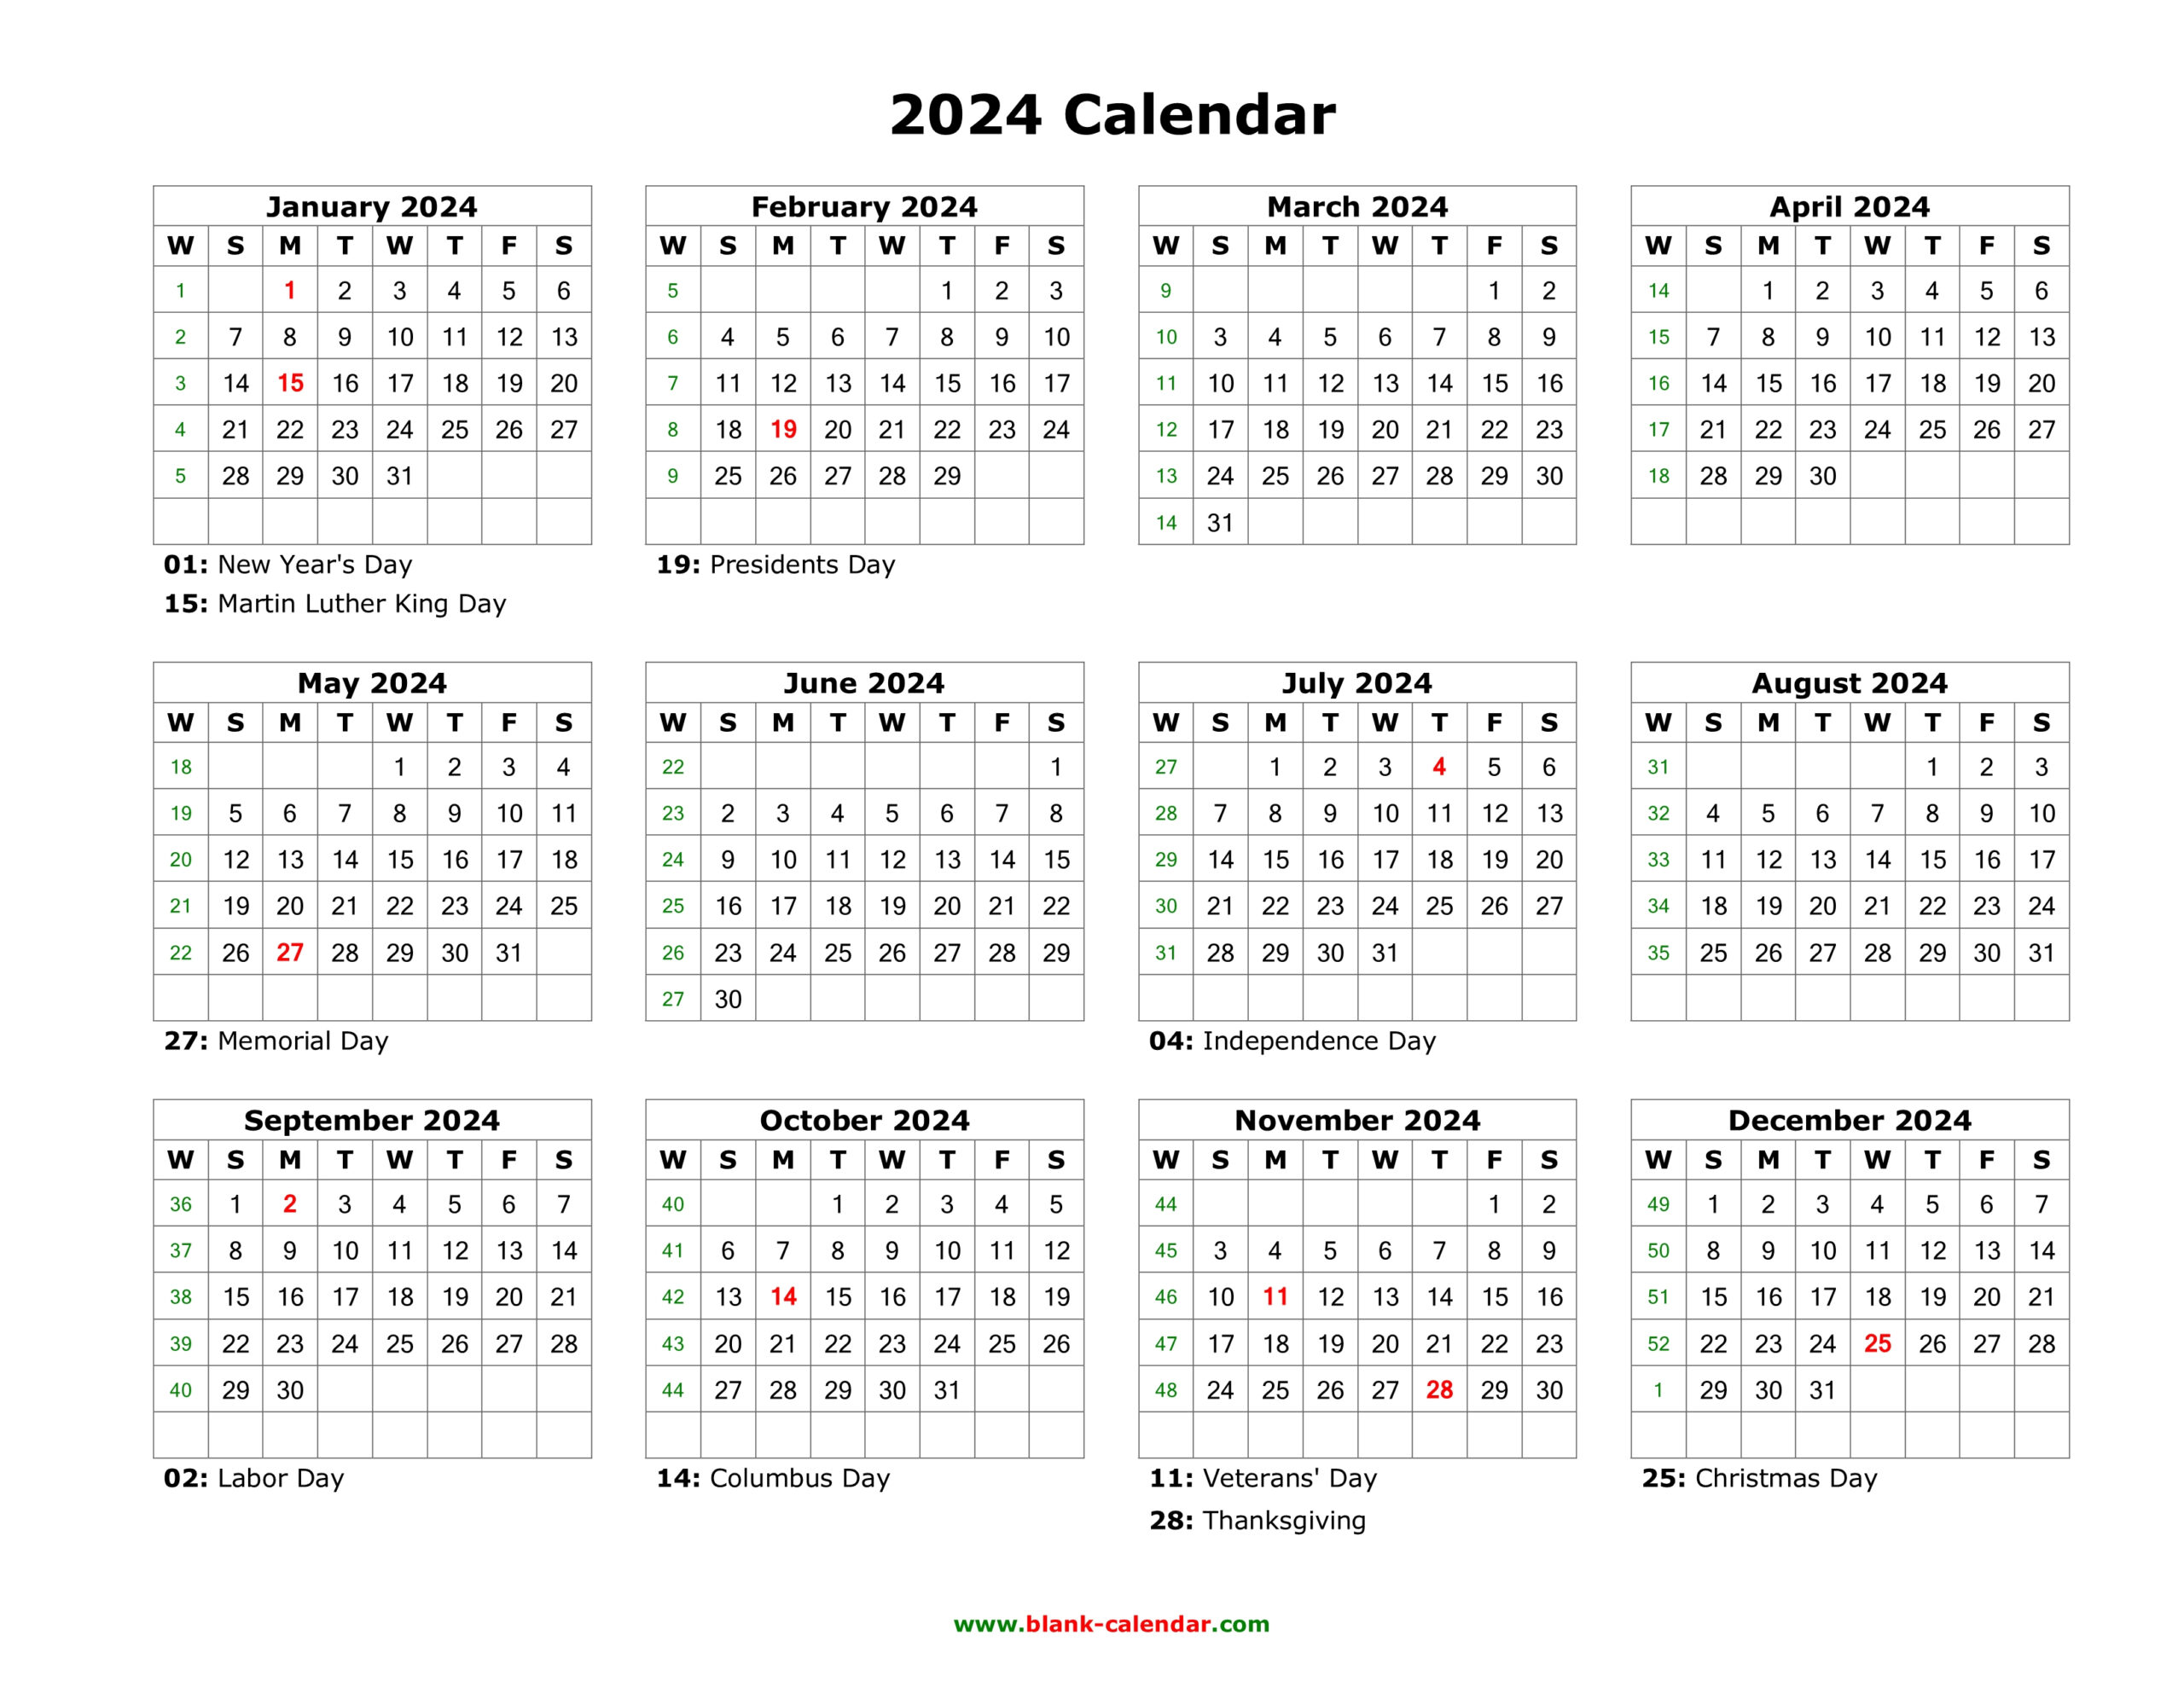 Blank Calendar 2024 | Free Download Calendar Templates for 2024 Blank Calendar Printable With Holidays